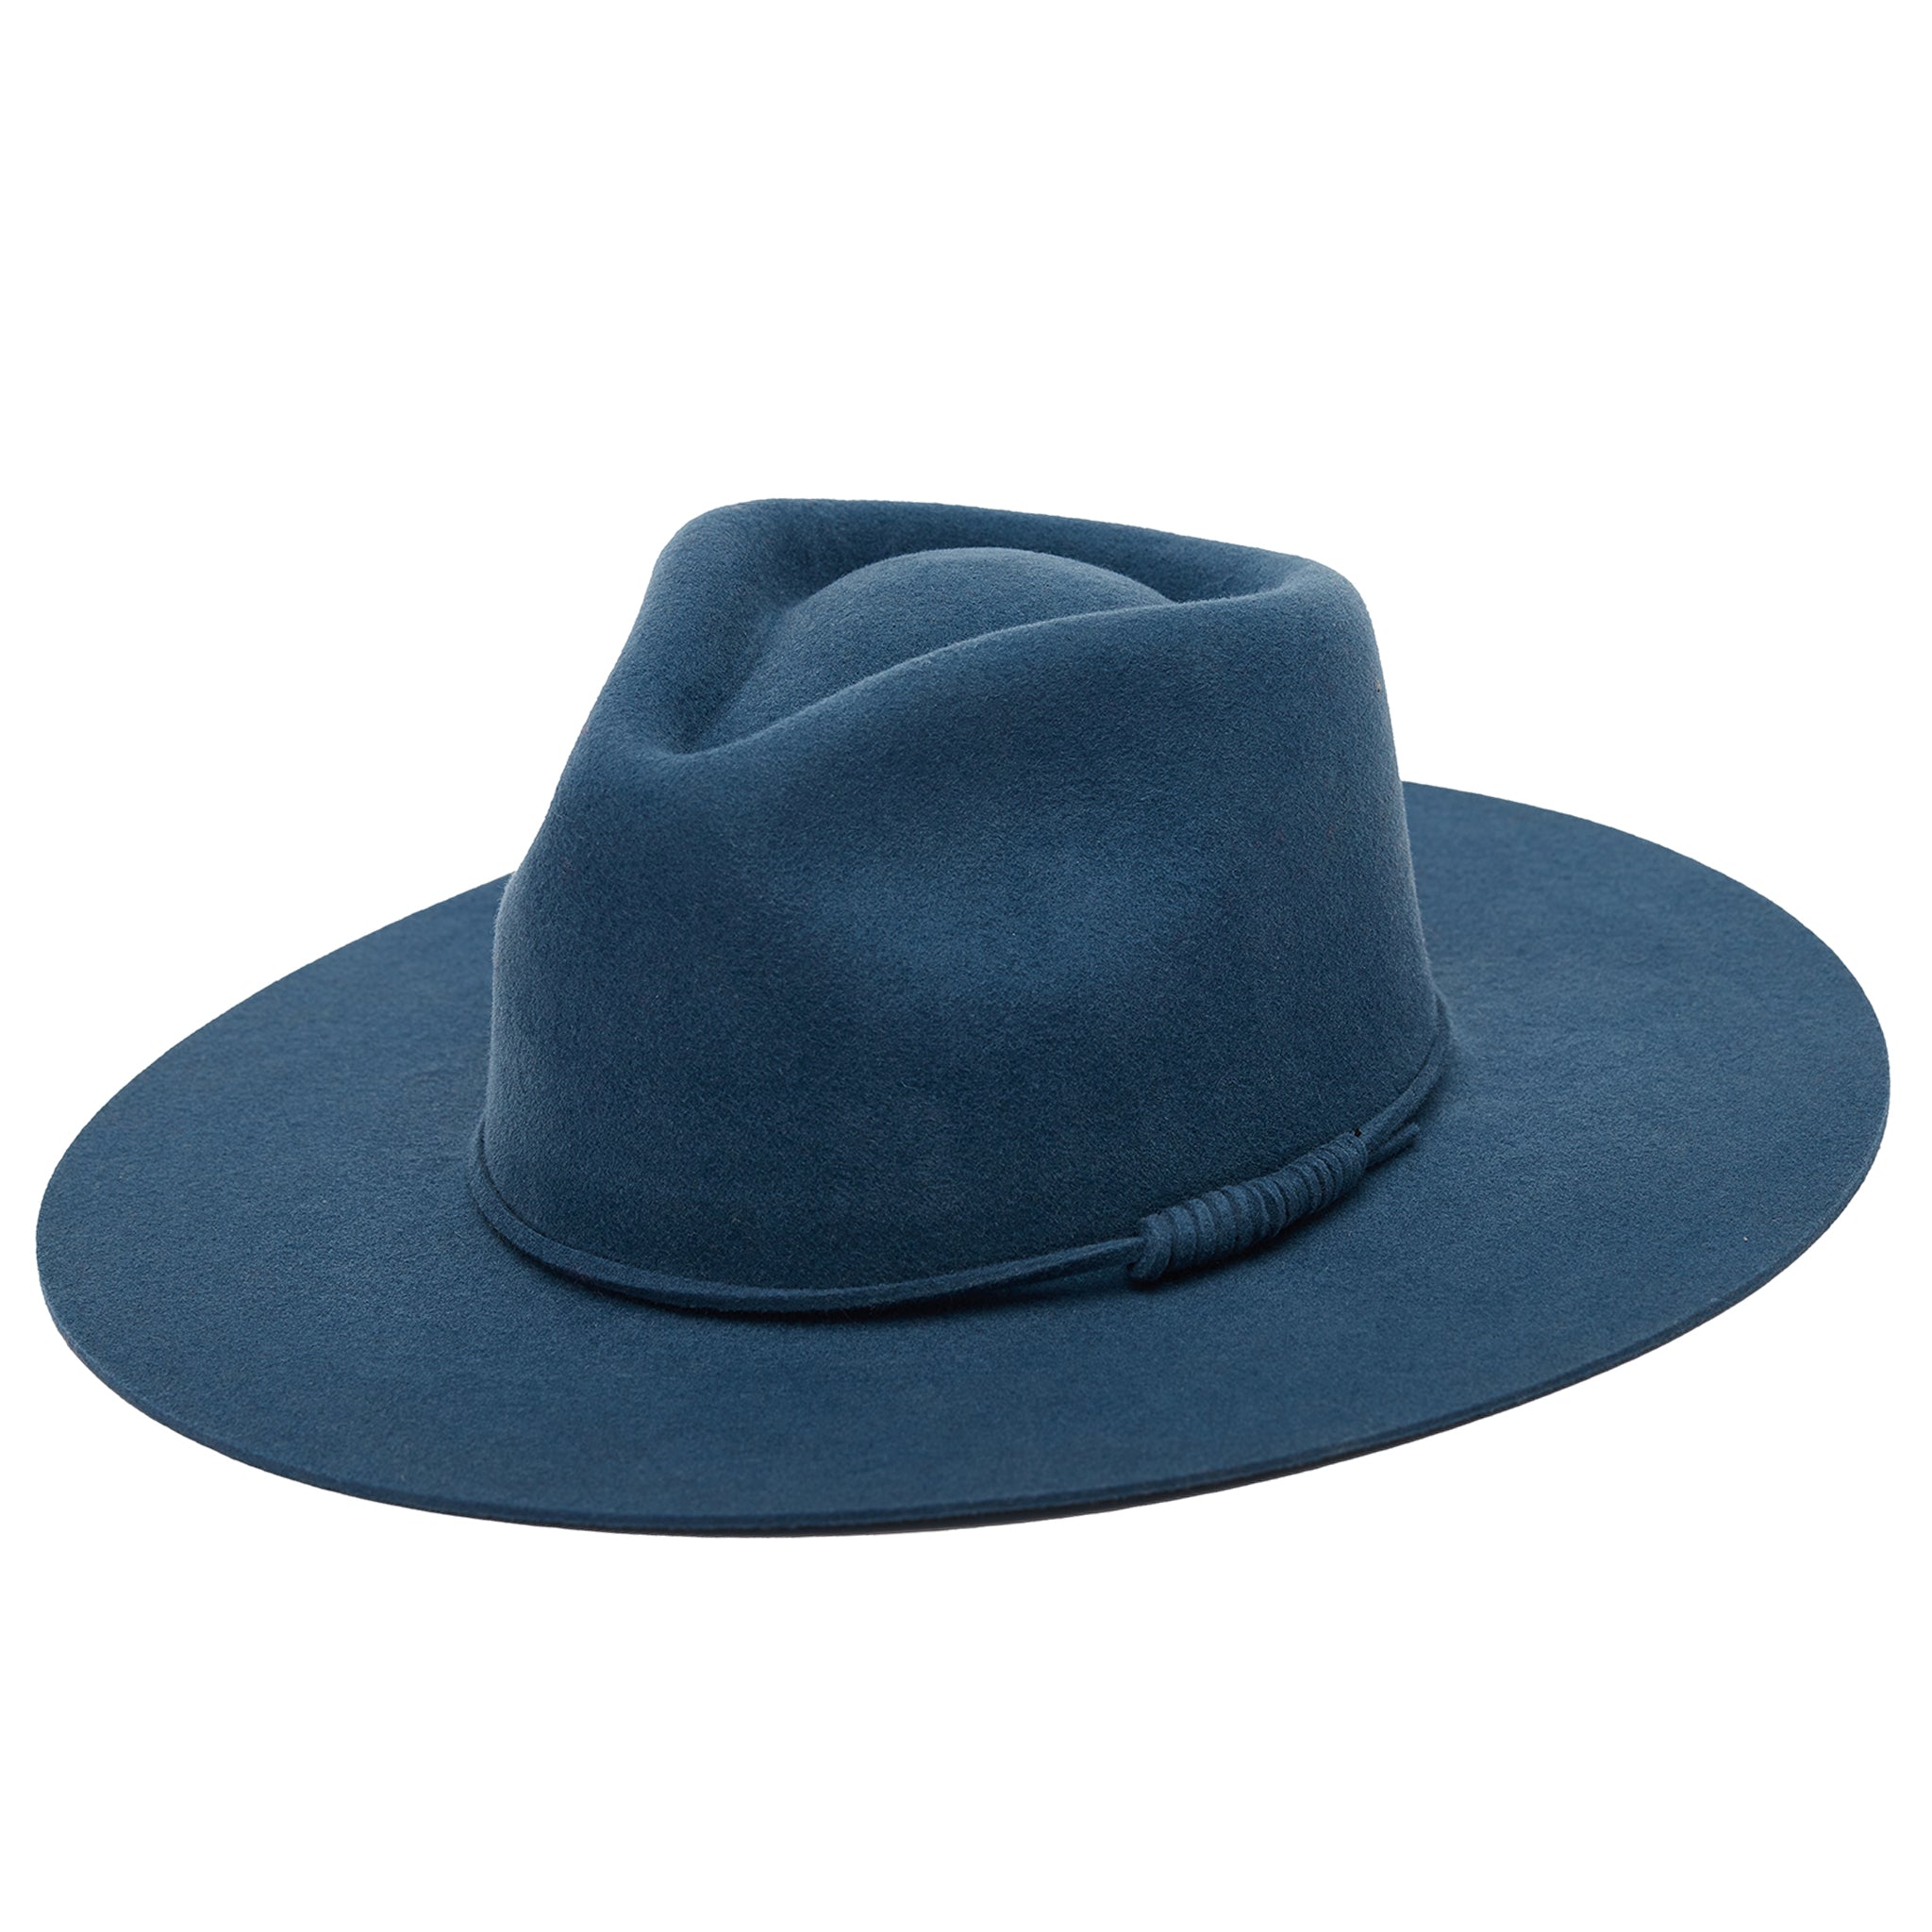 The Gaucho – Arre Hats